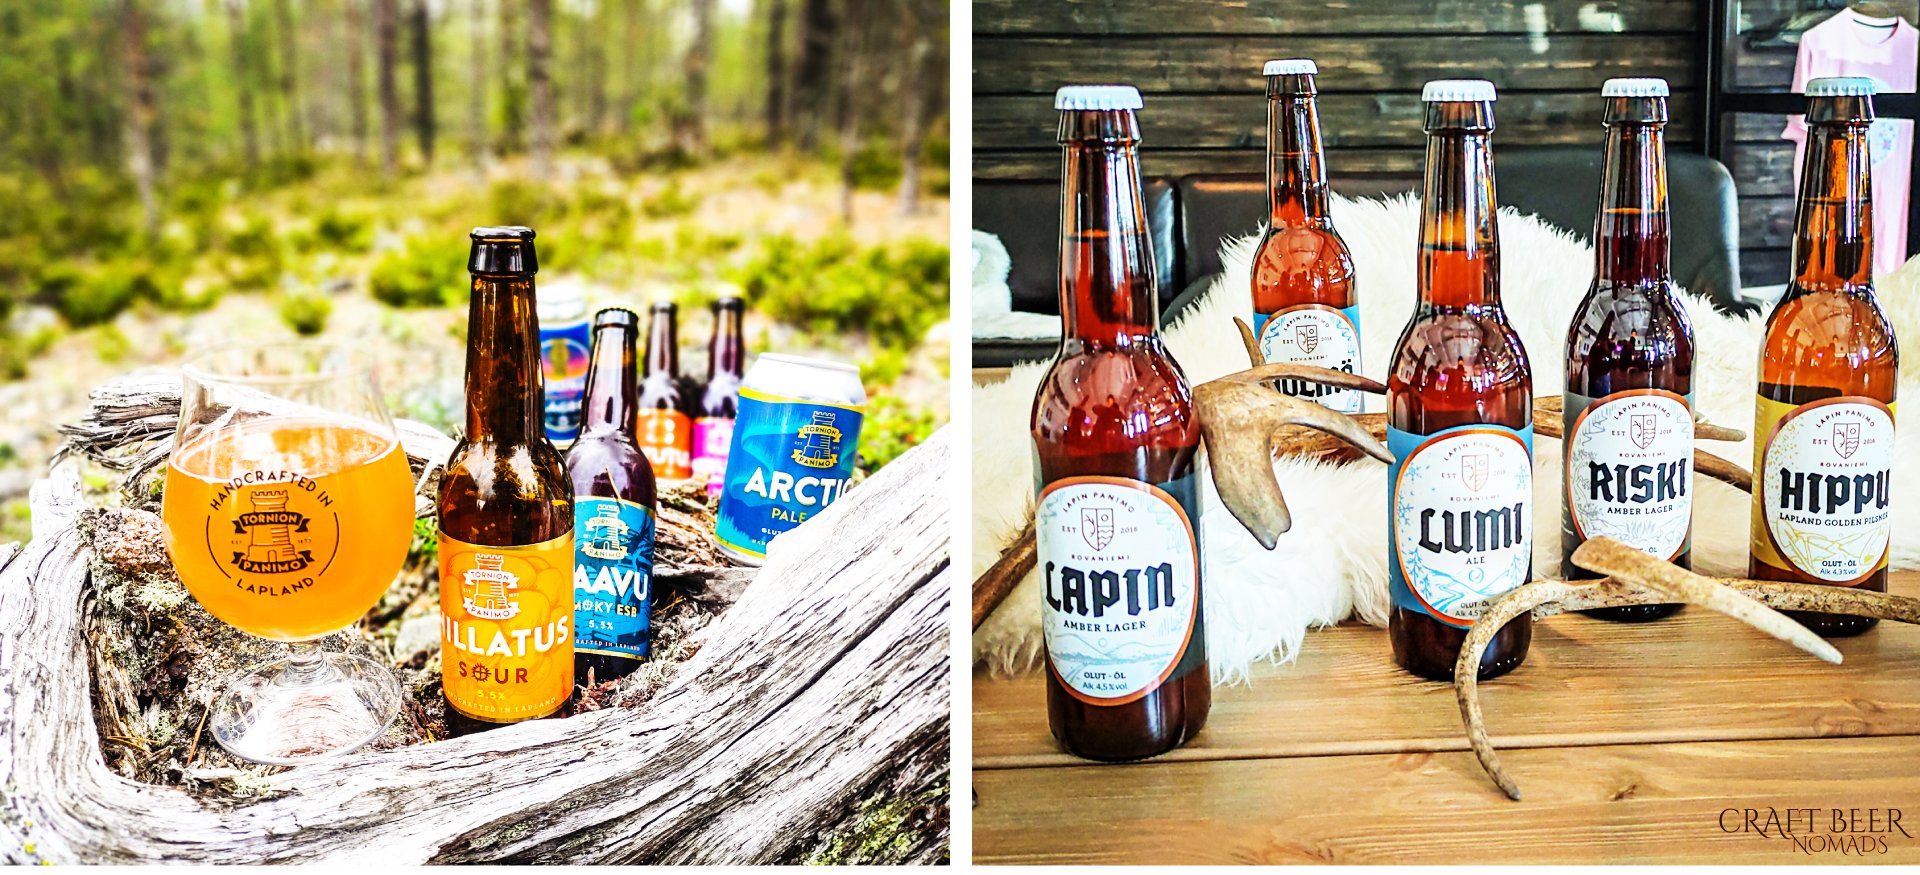 Craft Beer in Lapland, Finland | Tornio Brewery in Tornio & Lapland Brewery in Rovaniemi | Craft Beer Nomads blog